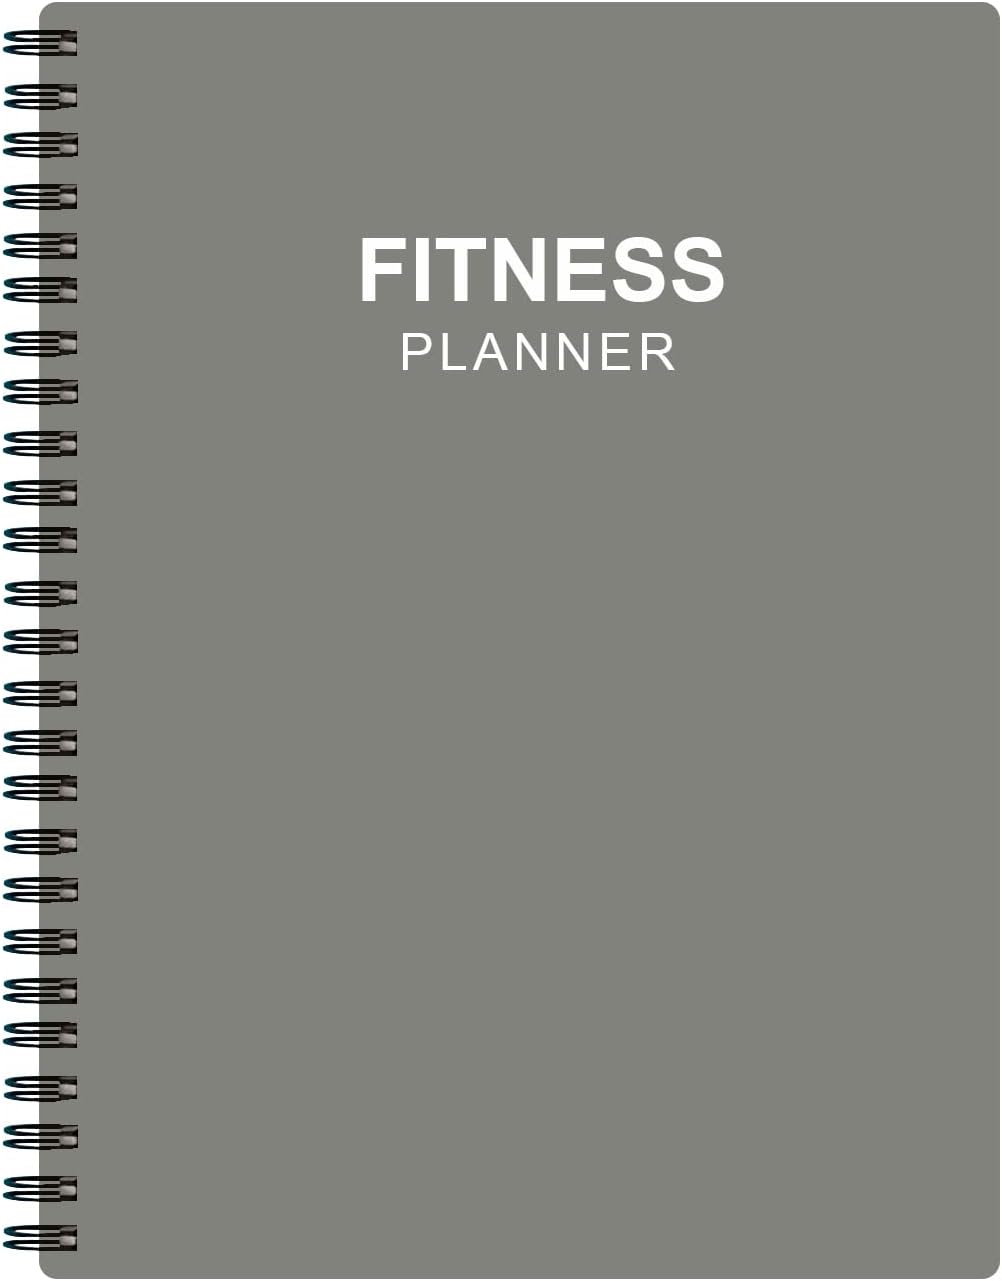 Fitness Journal for Women & Men - A5 Workout Journal/Planner to Track Weight Loss, GYM, Bodybuilding Progress - Daily Health & Wellness Tracker, Grey, 14.8 x 21cm